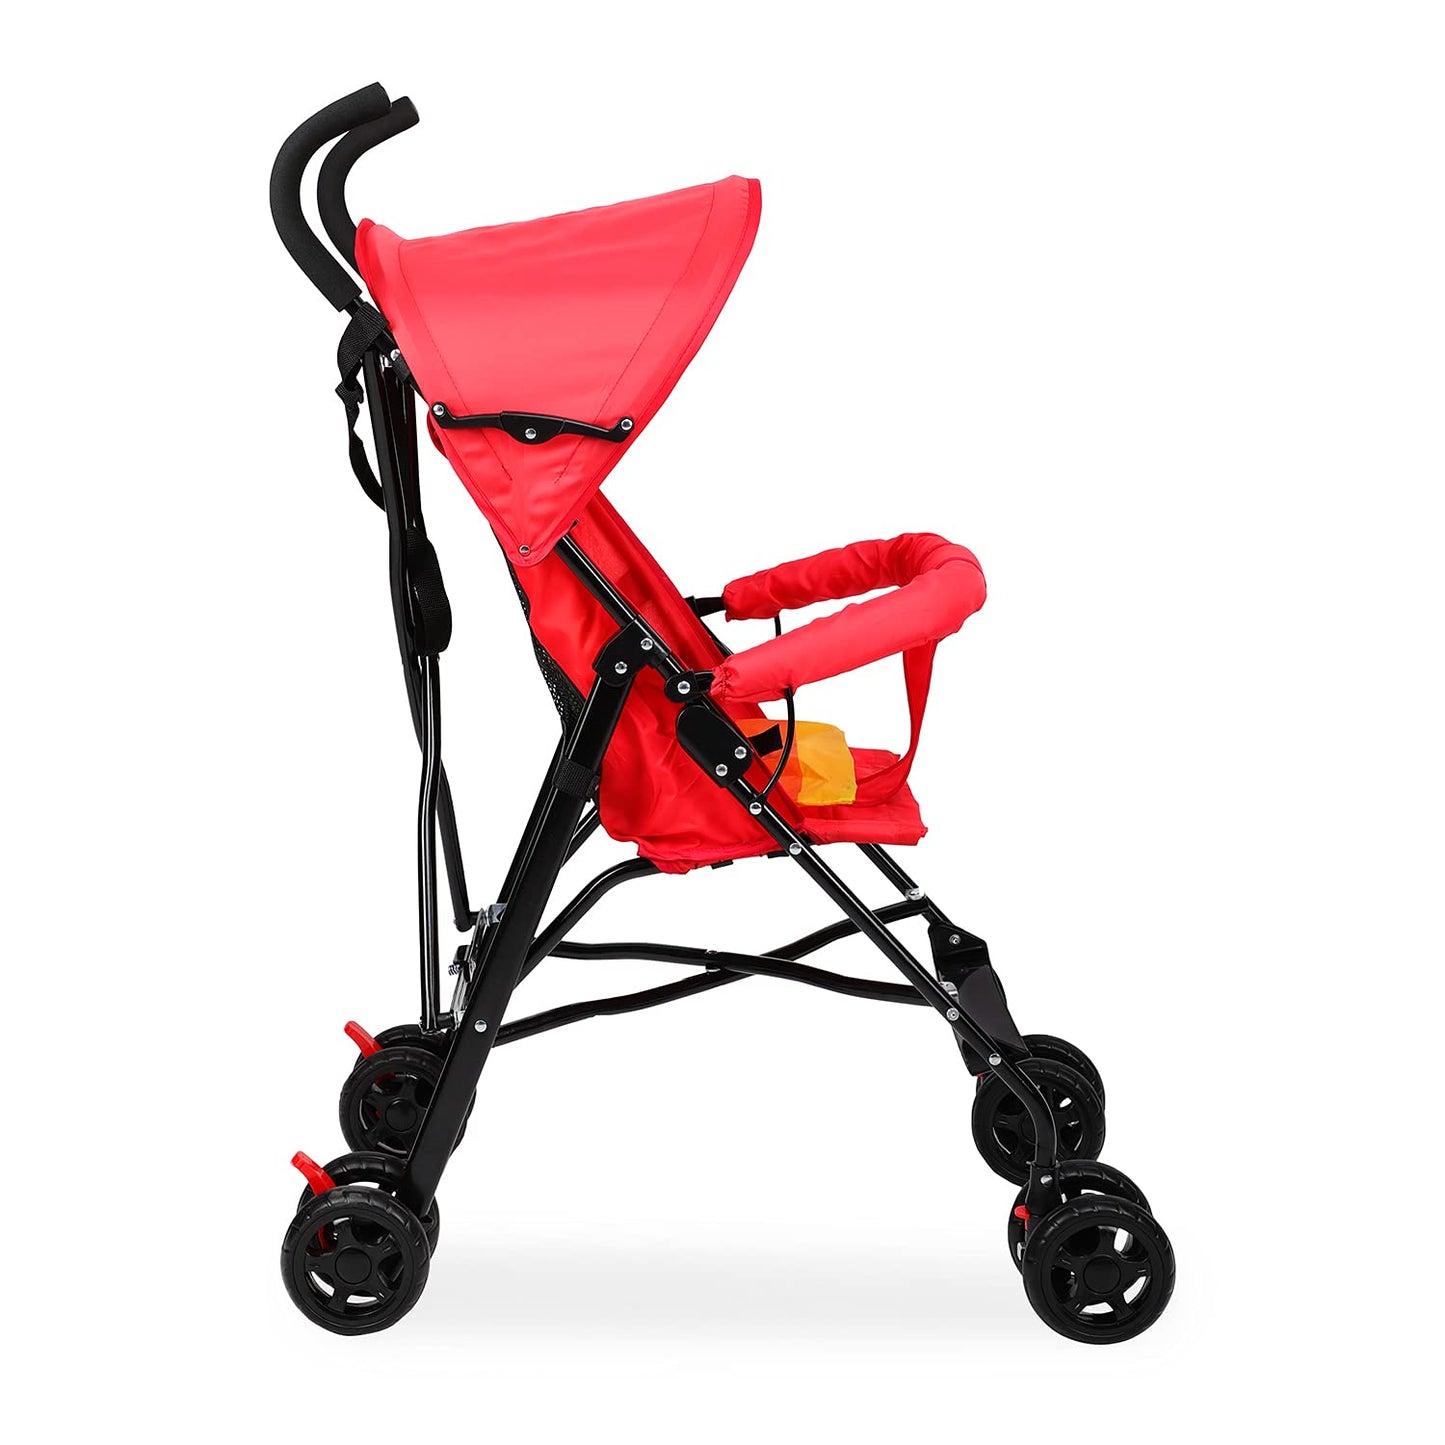 GettBoles Foldable Baby Stroller for Kids-Buggy Pram for Newborn/Infants with Easy Folding, Footrest, Multi Red